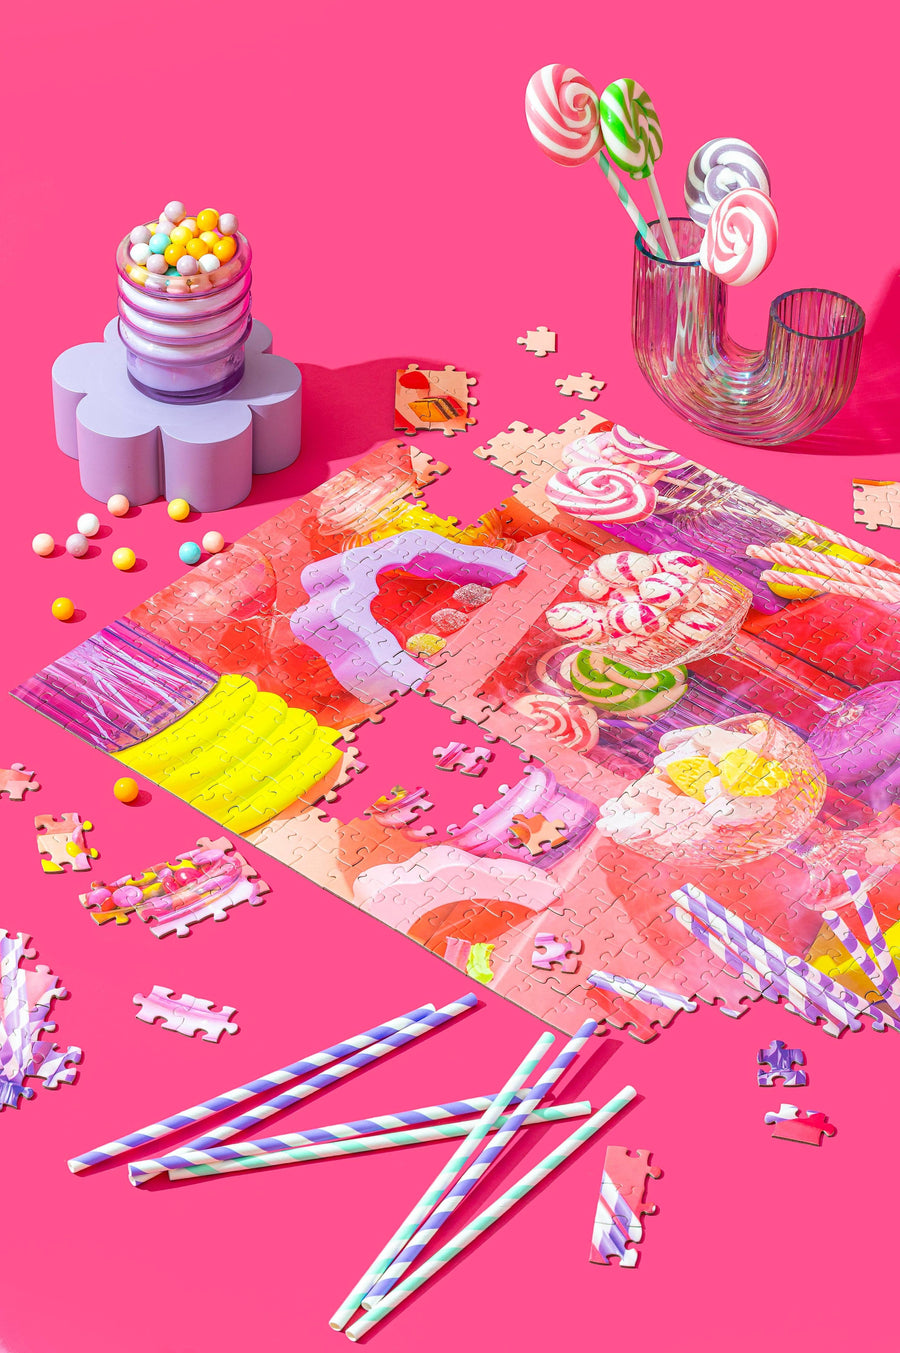 Sweet Dreams | 500 Piece Jigsaw Puzzle w/ Canvas Bag